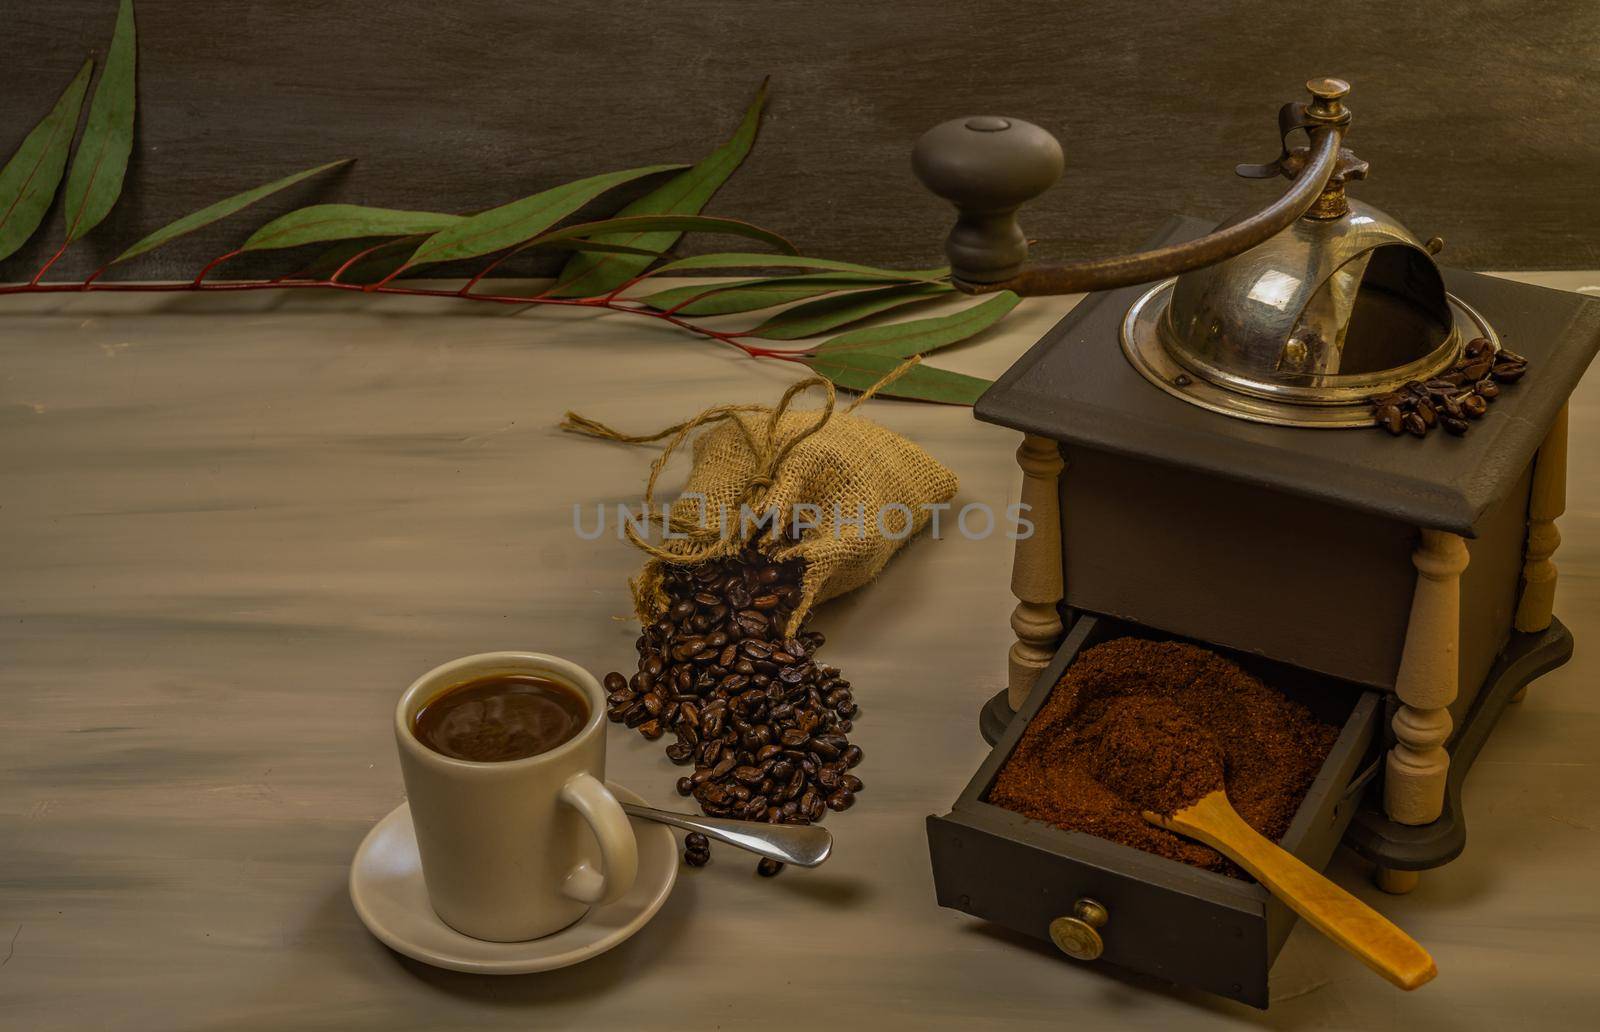 coffee beans and ground coffee by joseantona